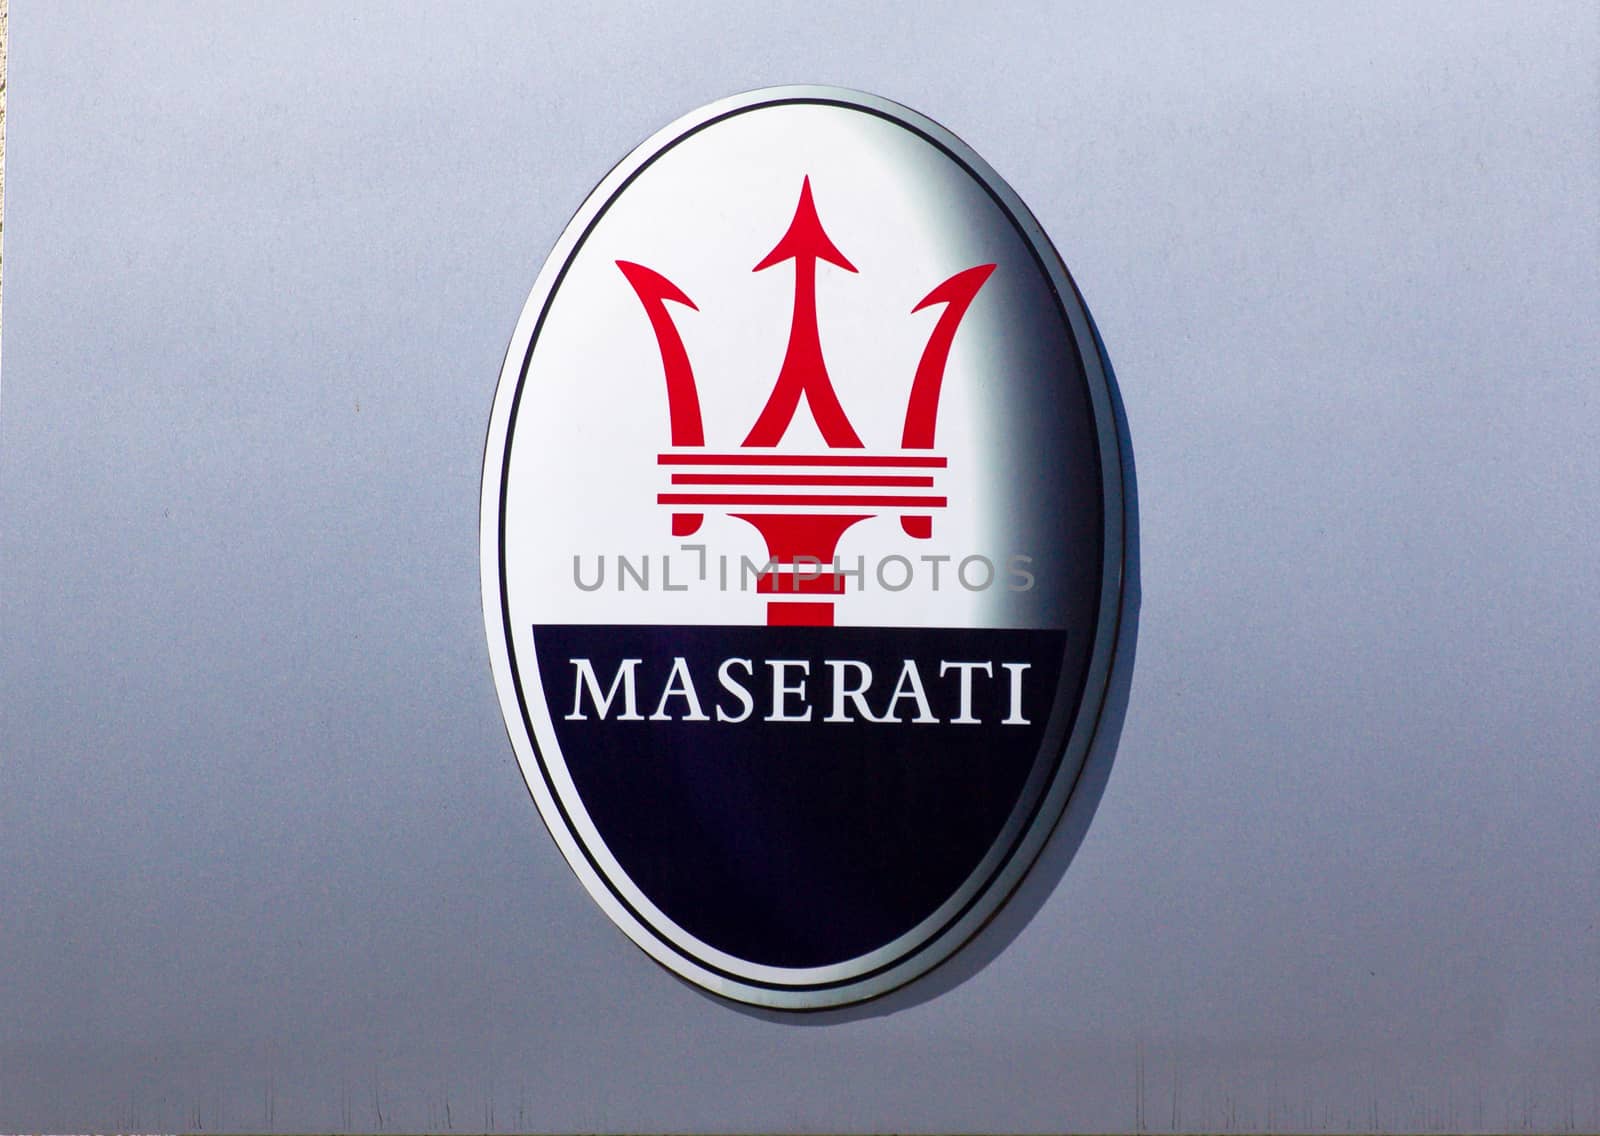 GLENDALE, CA/USA - OCTOBER 24, 2015: Maserati automobile dealership logo.